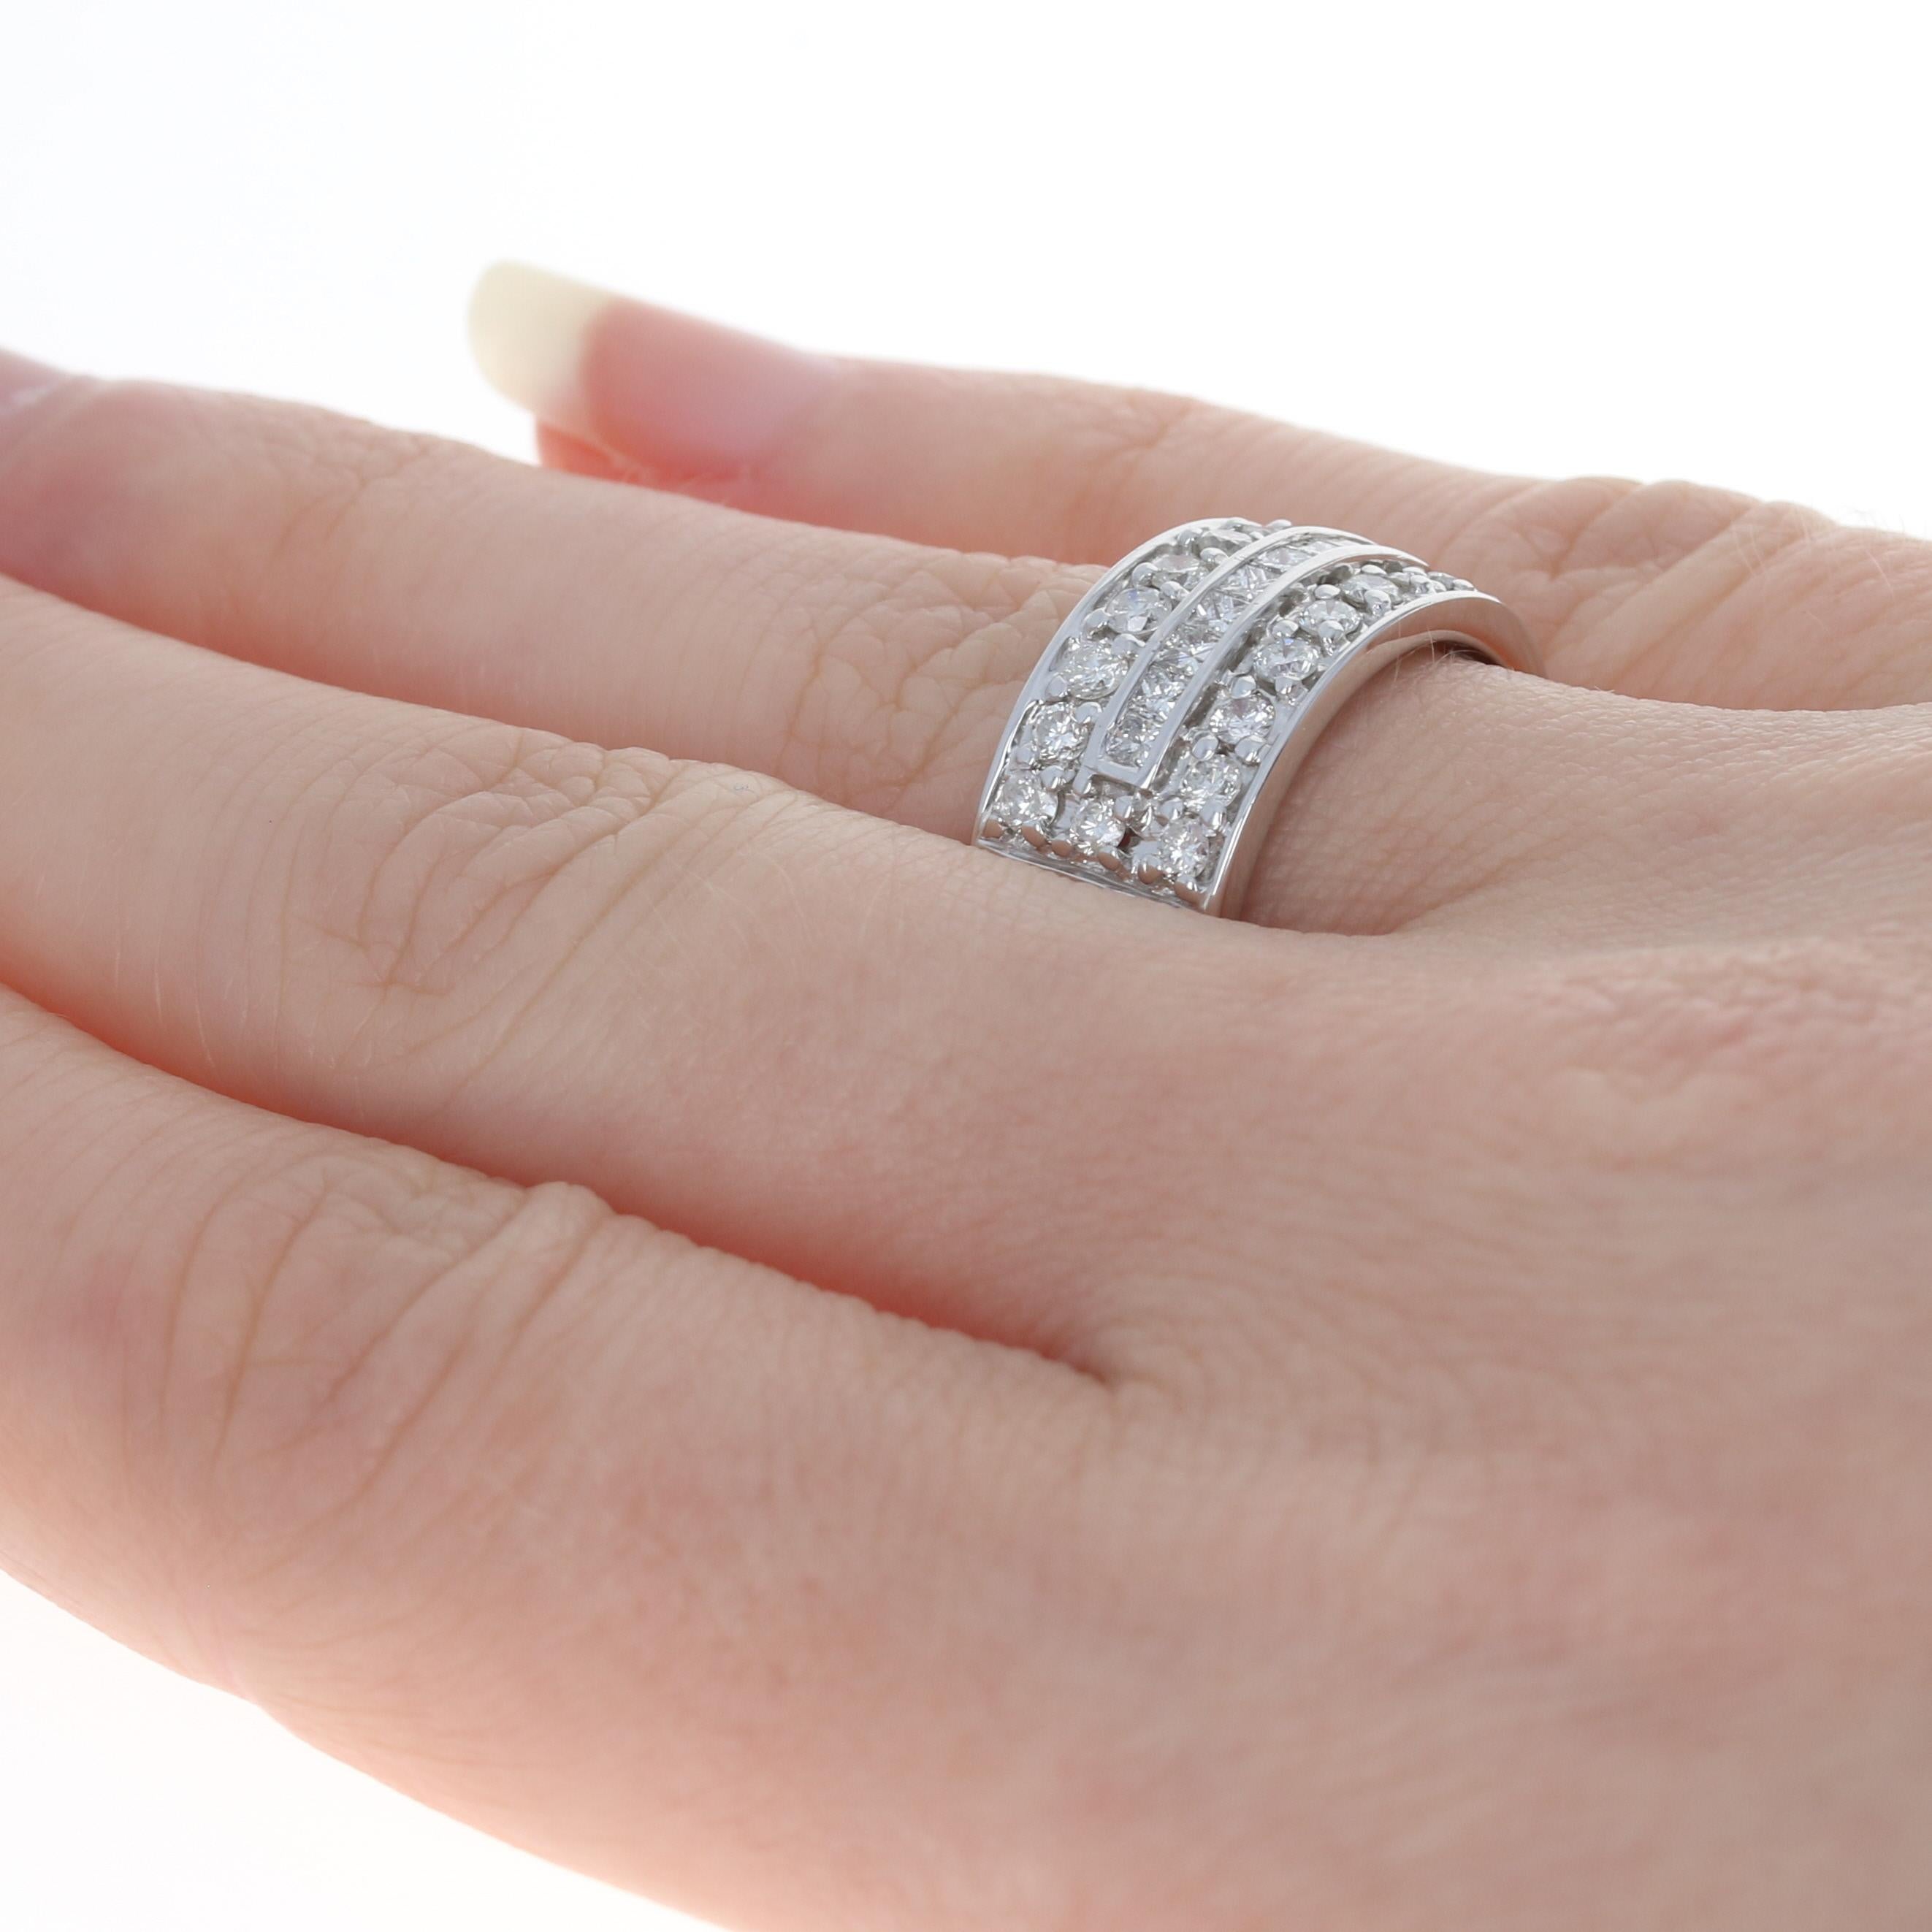 32 carat diamond ring